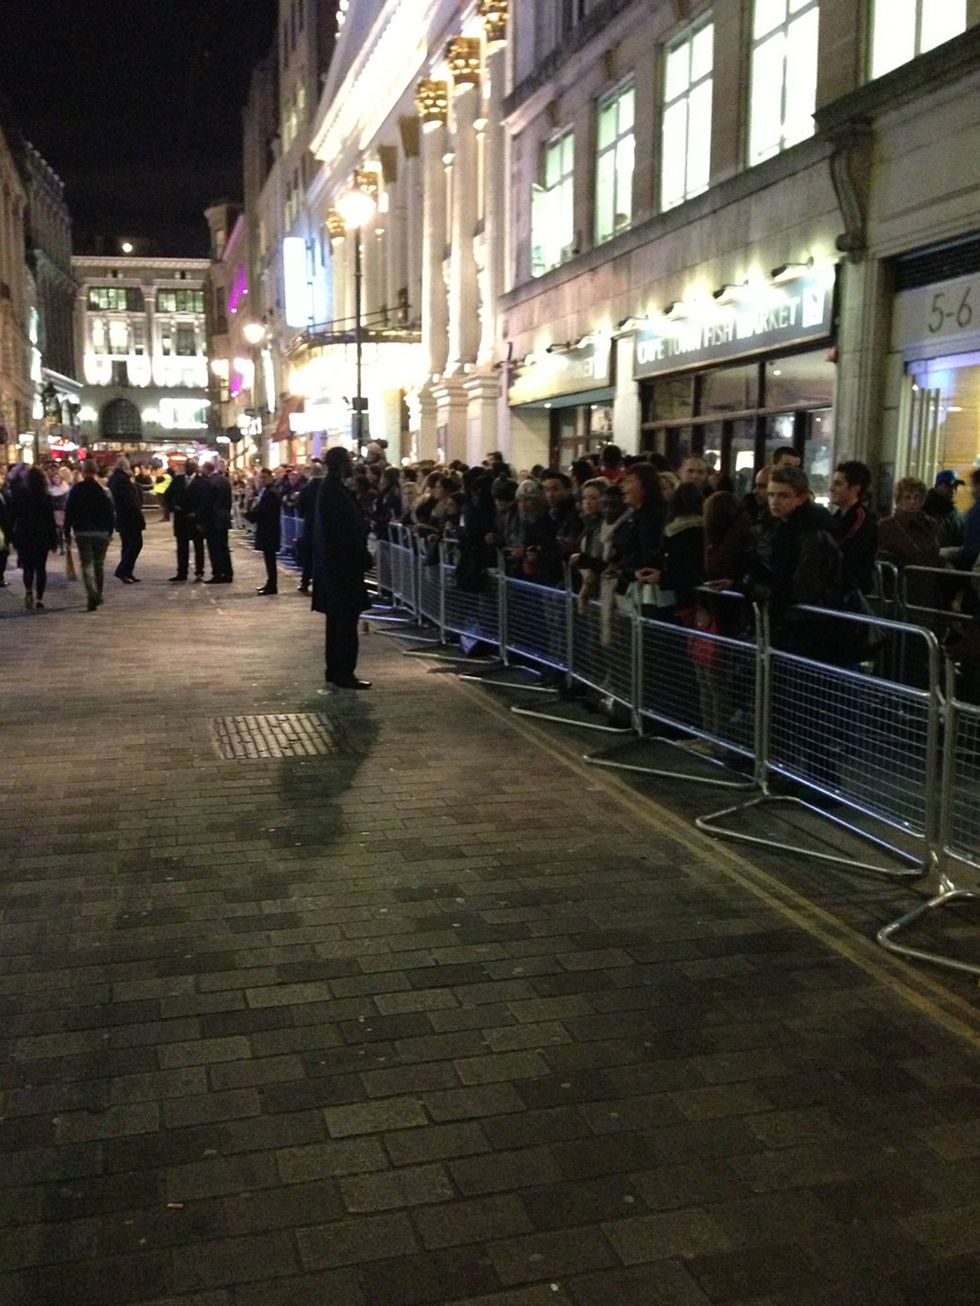 <p>Fans outside the venue waiting for Kardashians to arrive</p>